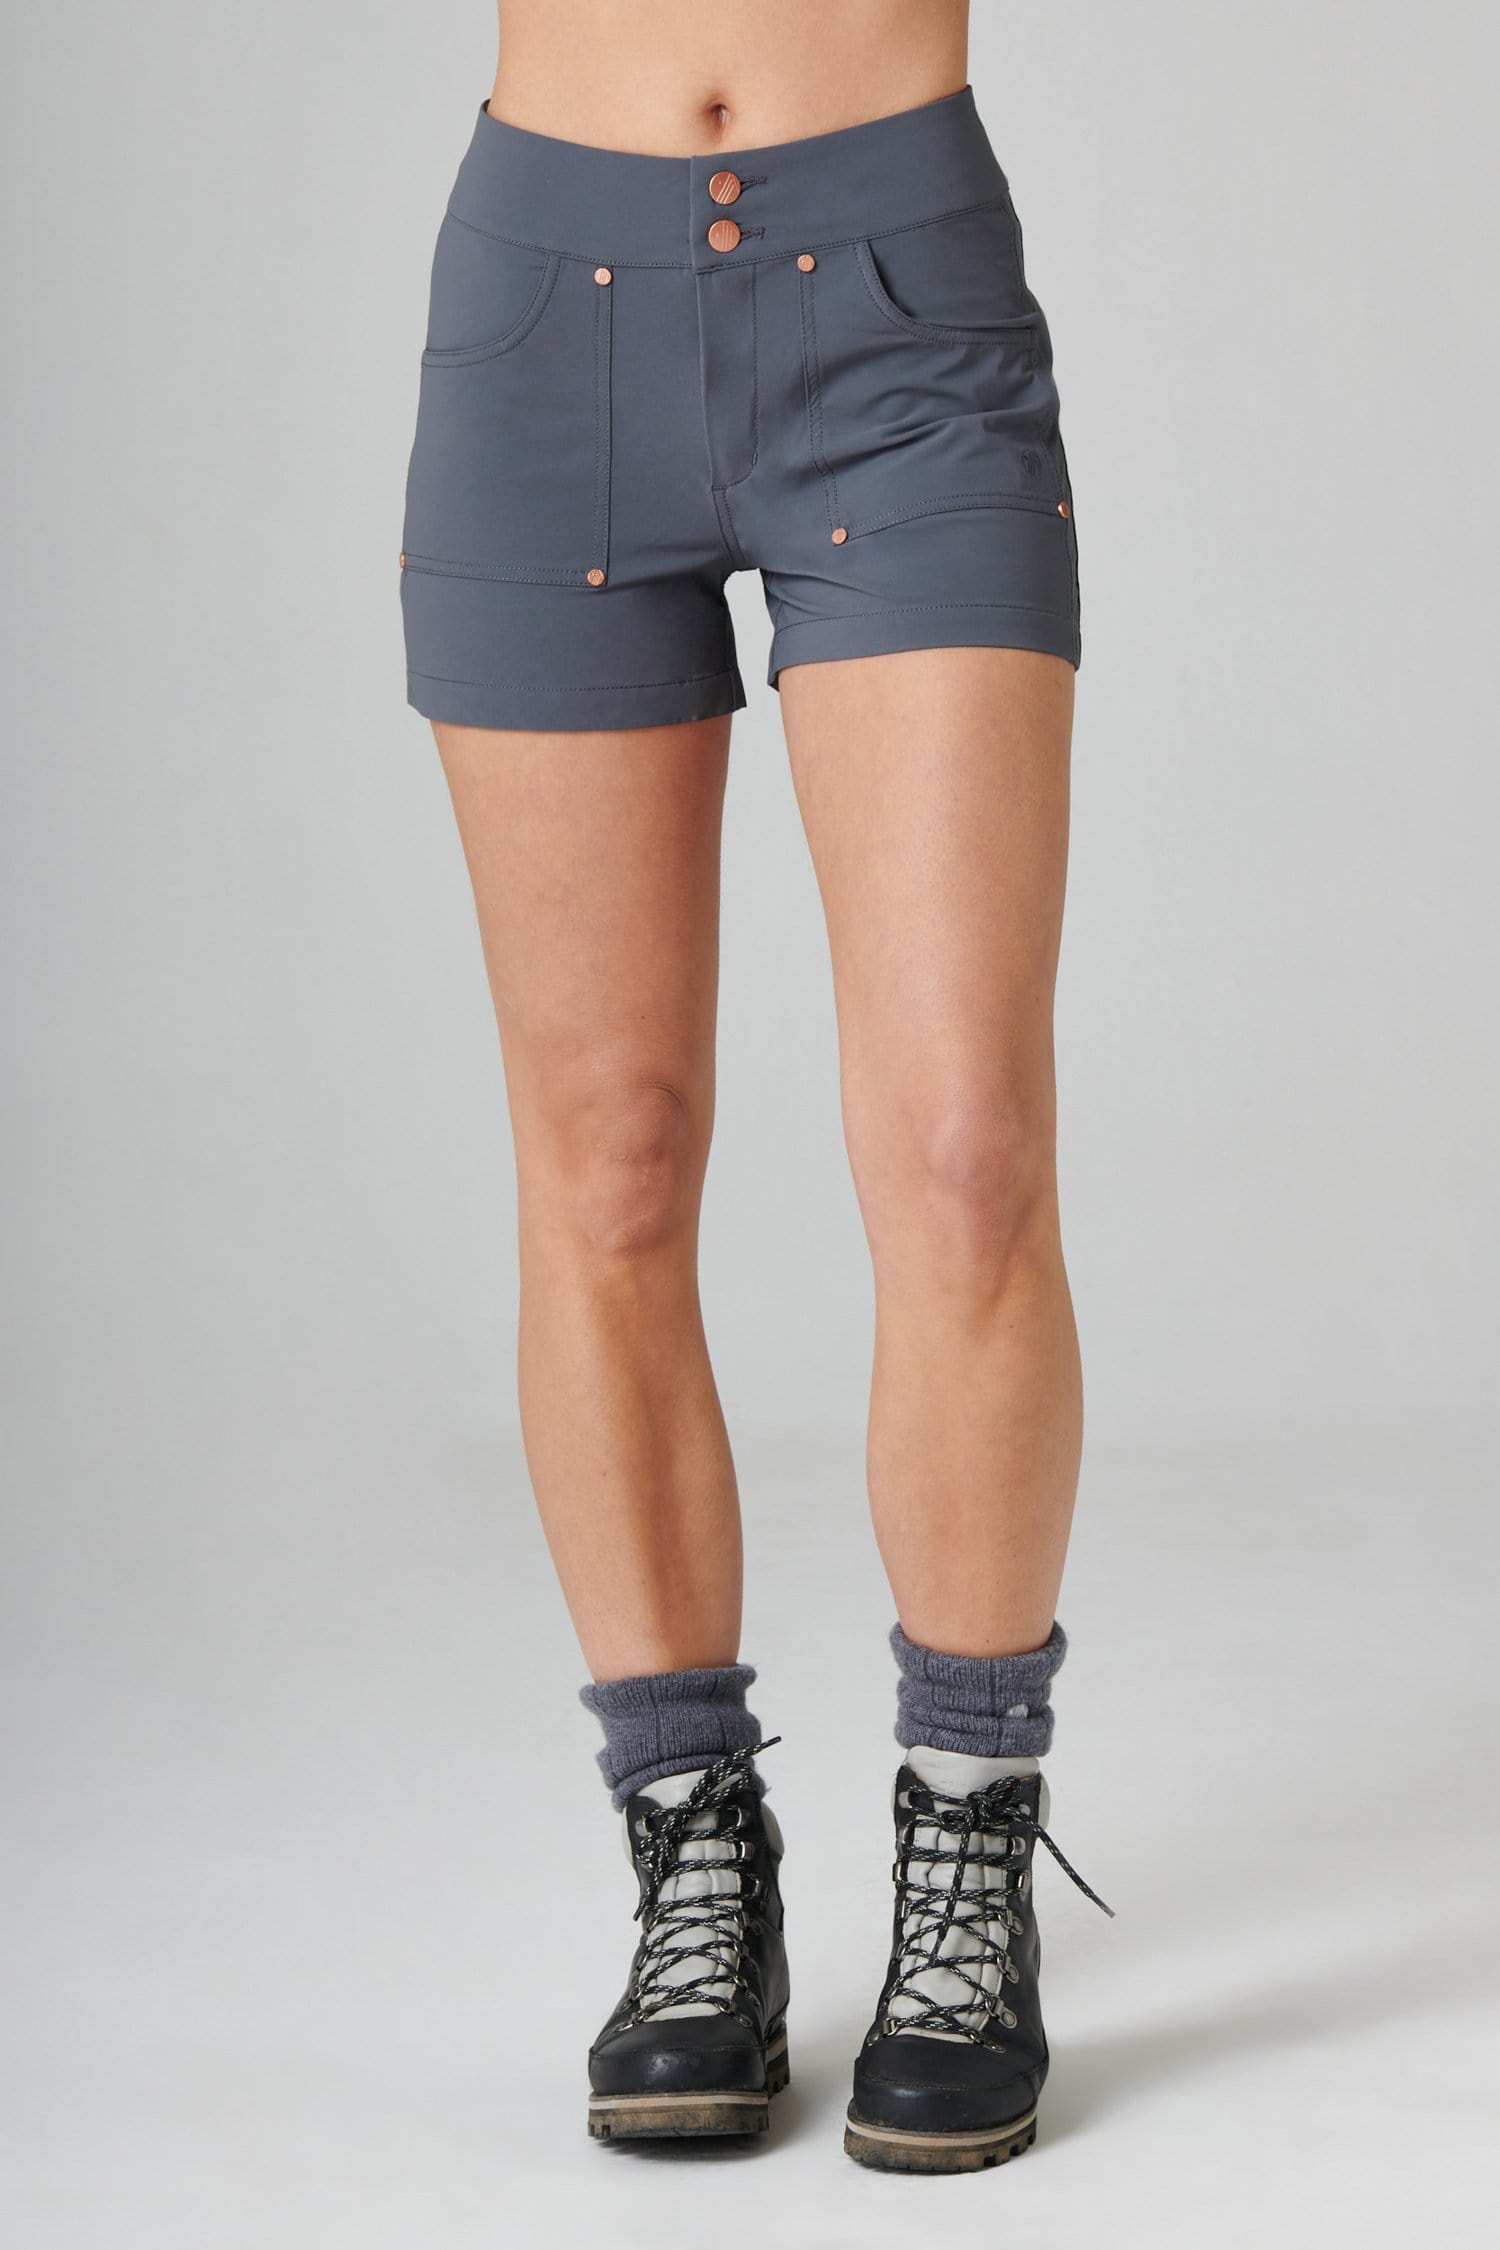 Trek Shorts - Storm Grey - 32 / Uk14 - Womens - Acai Outdoorwear